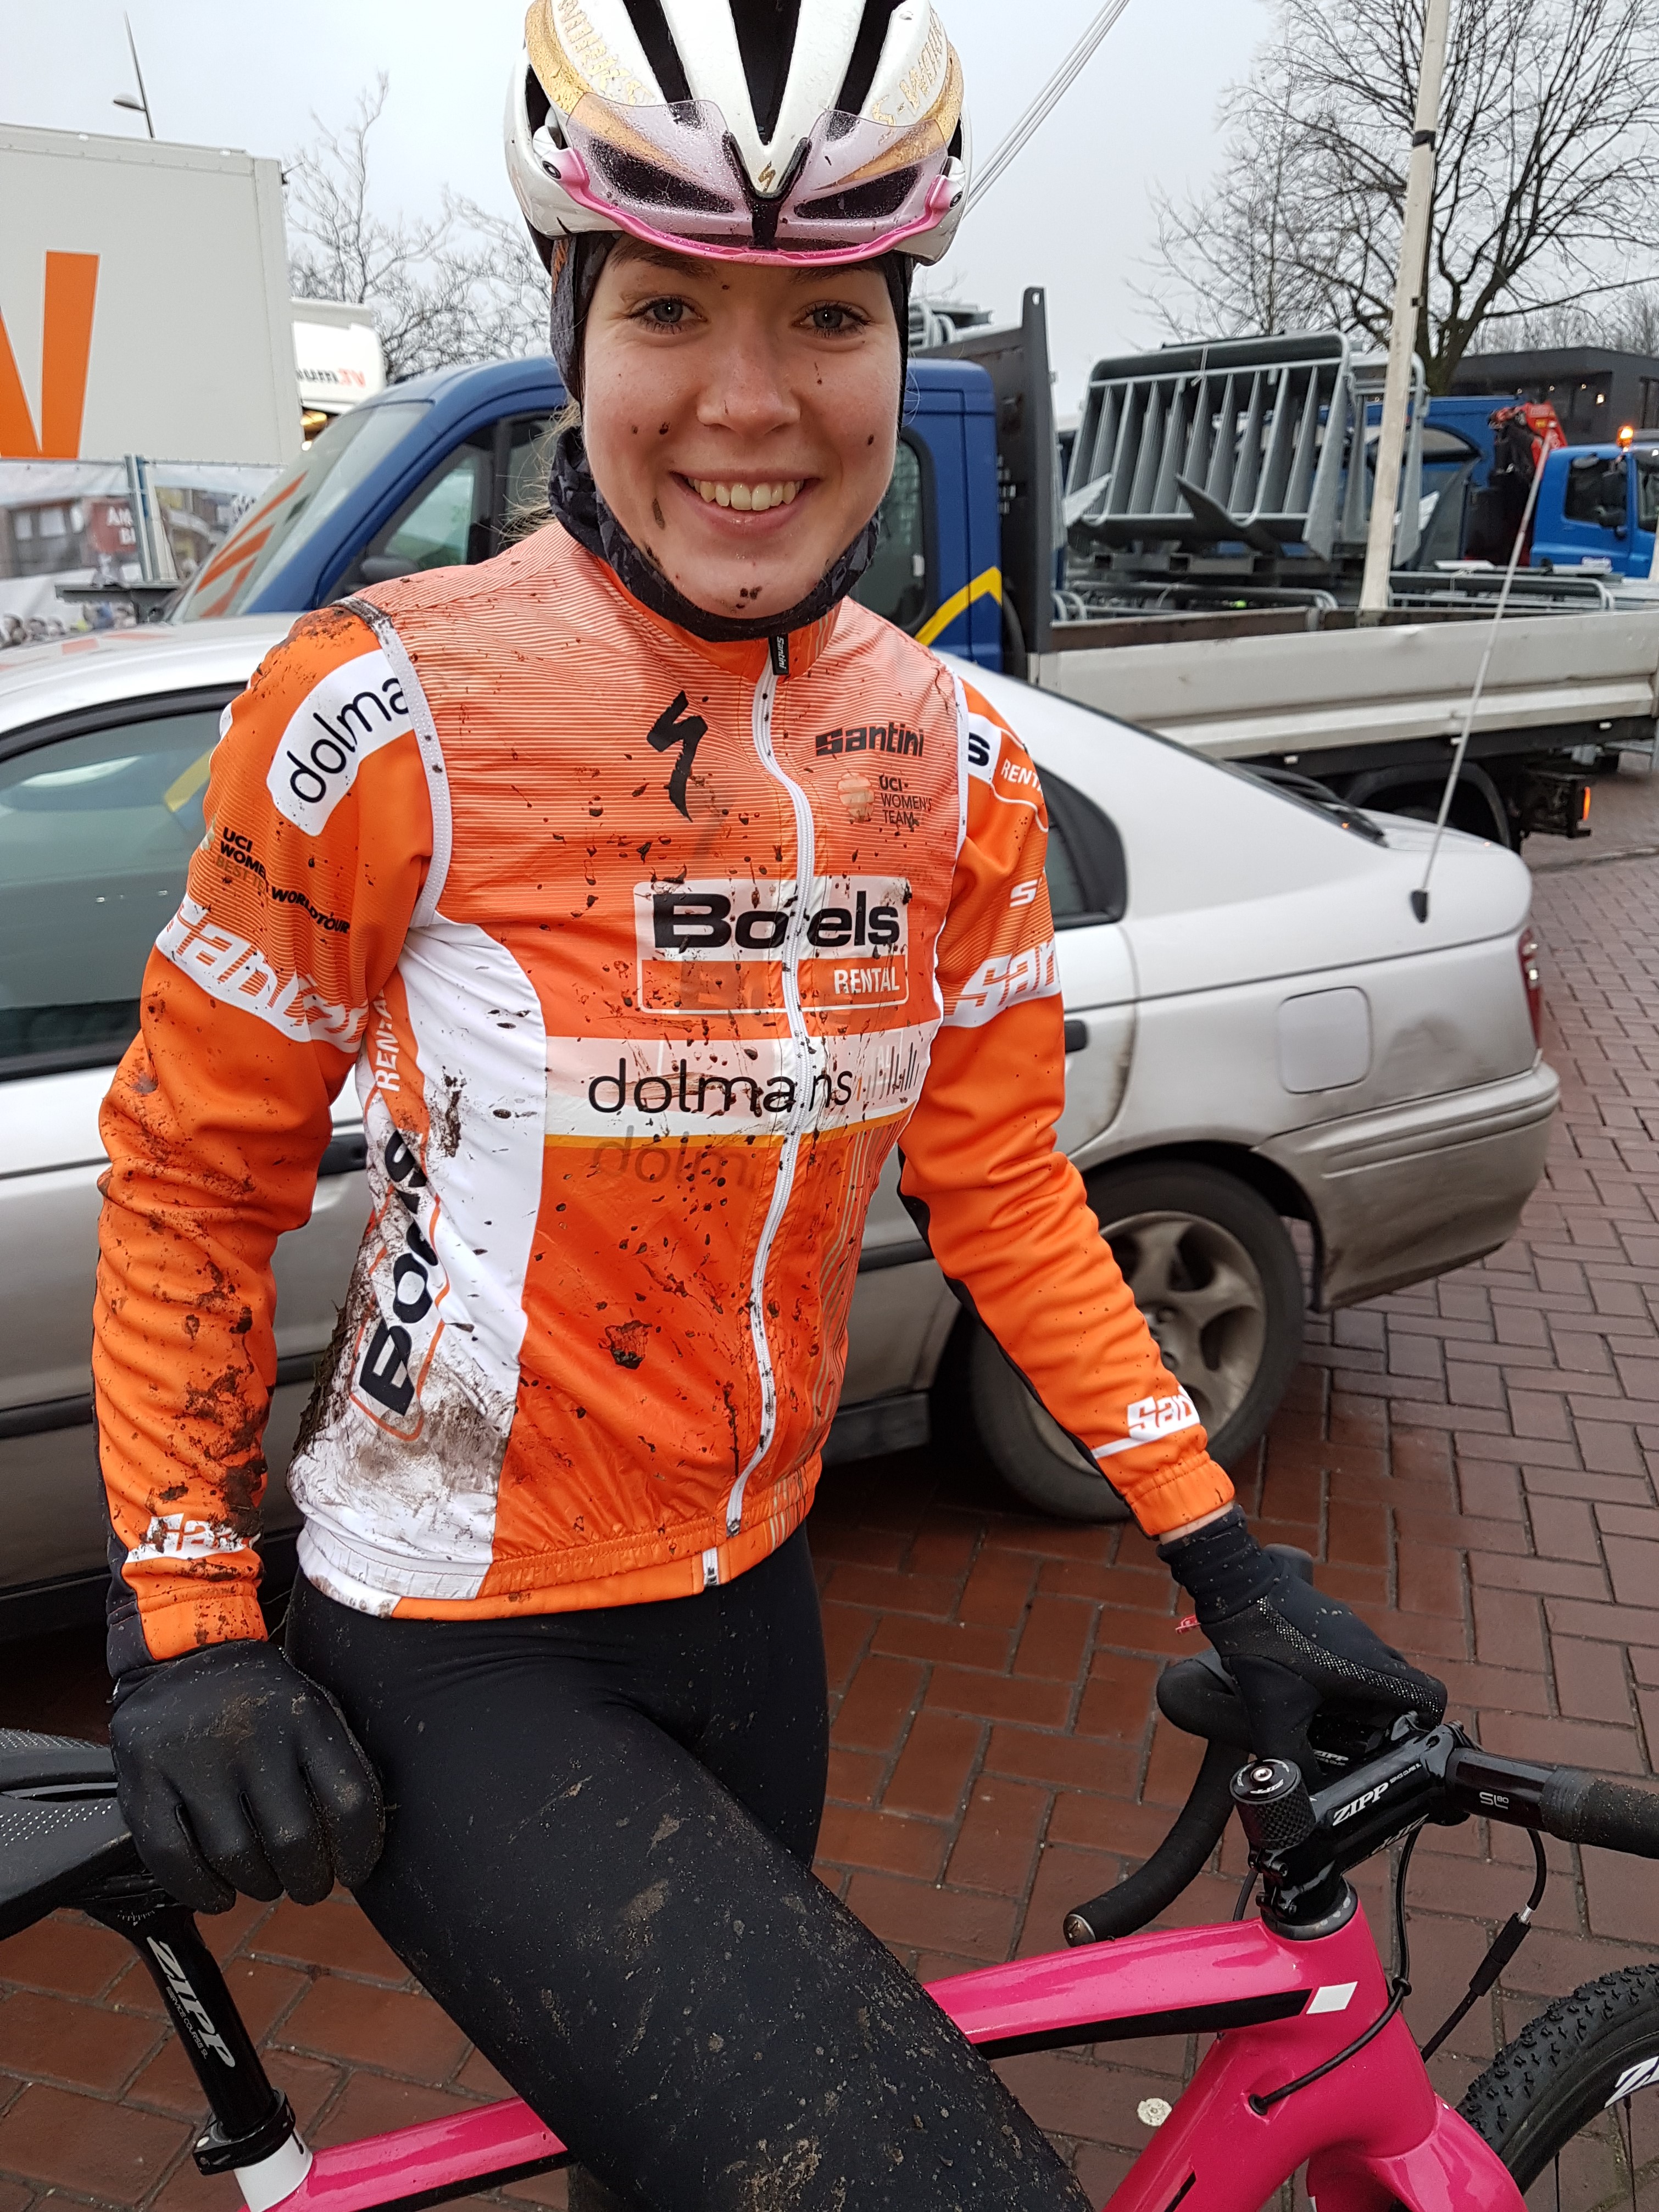 Olympisch kampioene Anna van der Breggen verkent het NK parcours